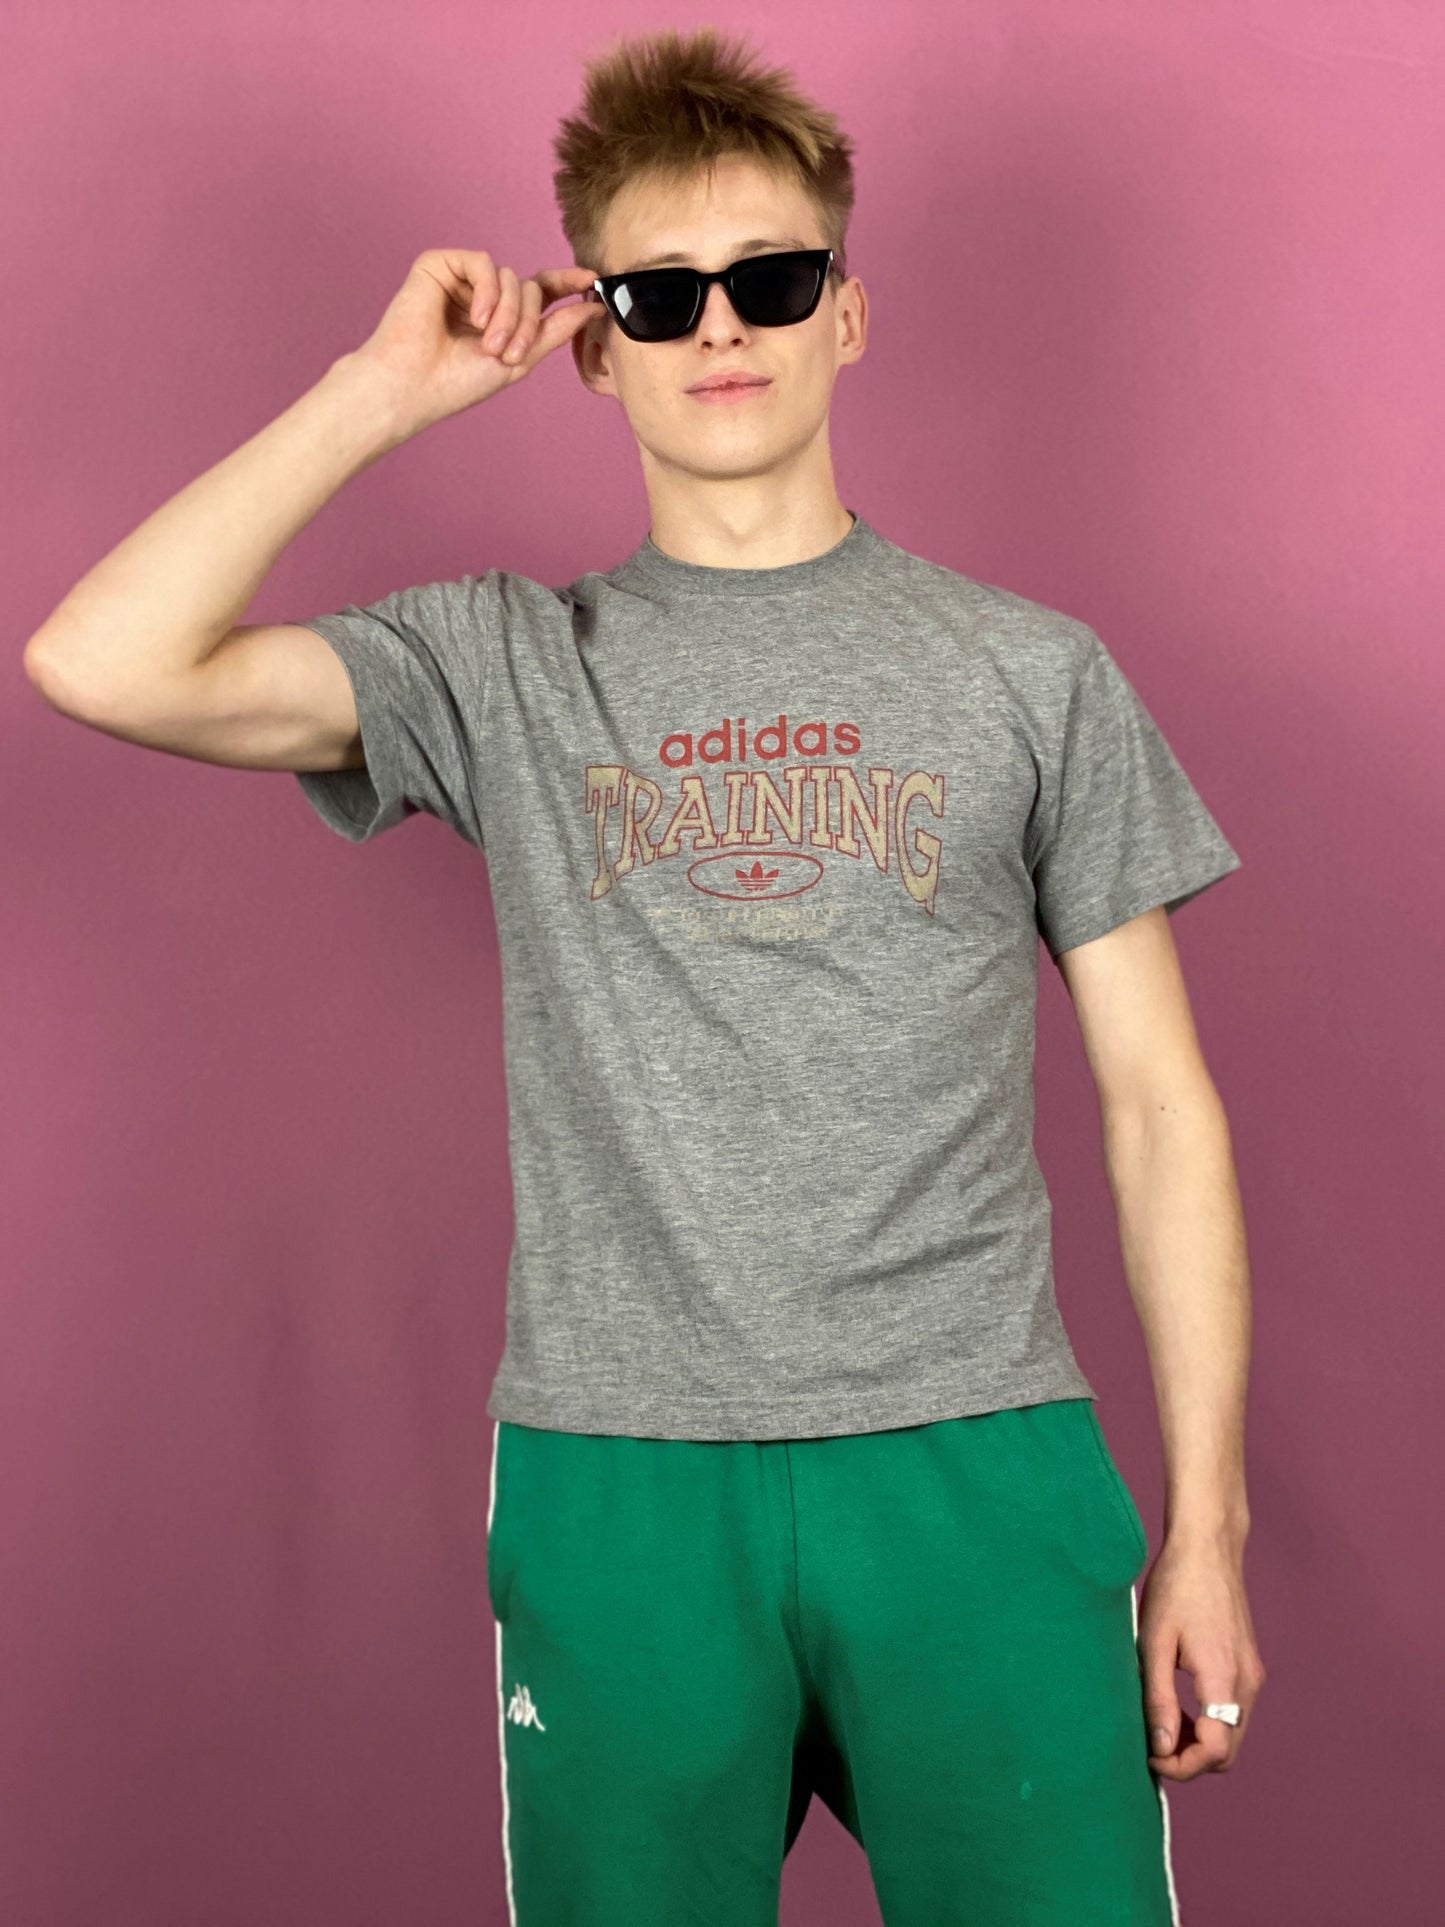 90s Adidas Vintage Kids T-Shirt